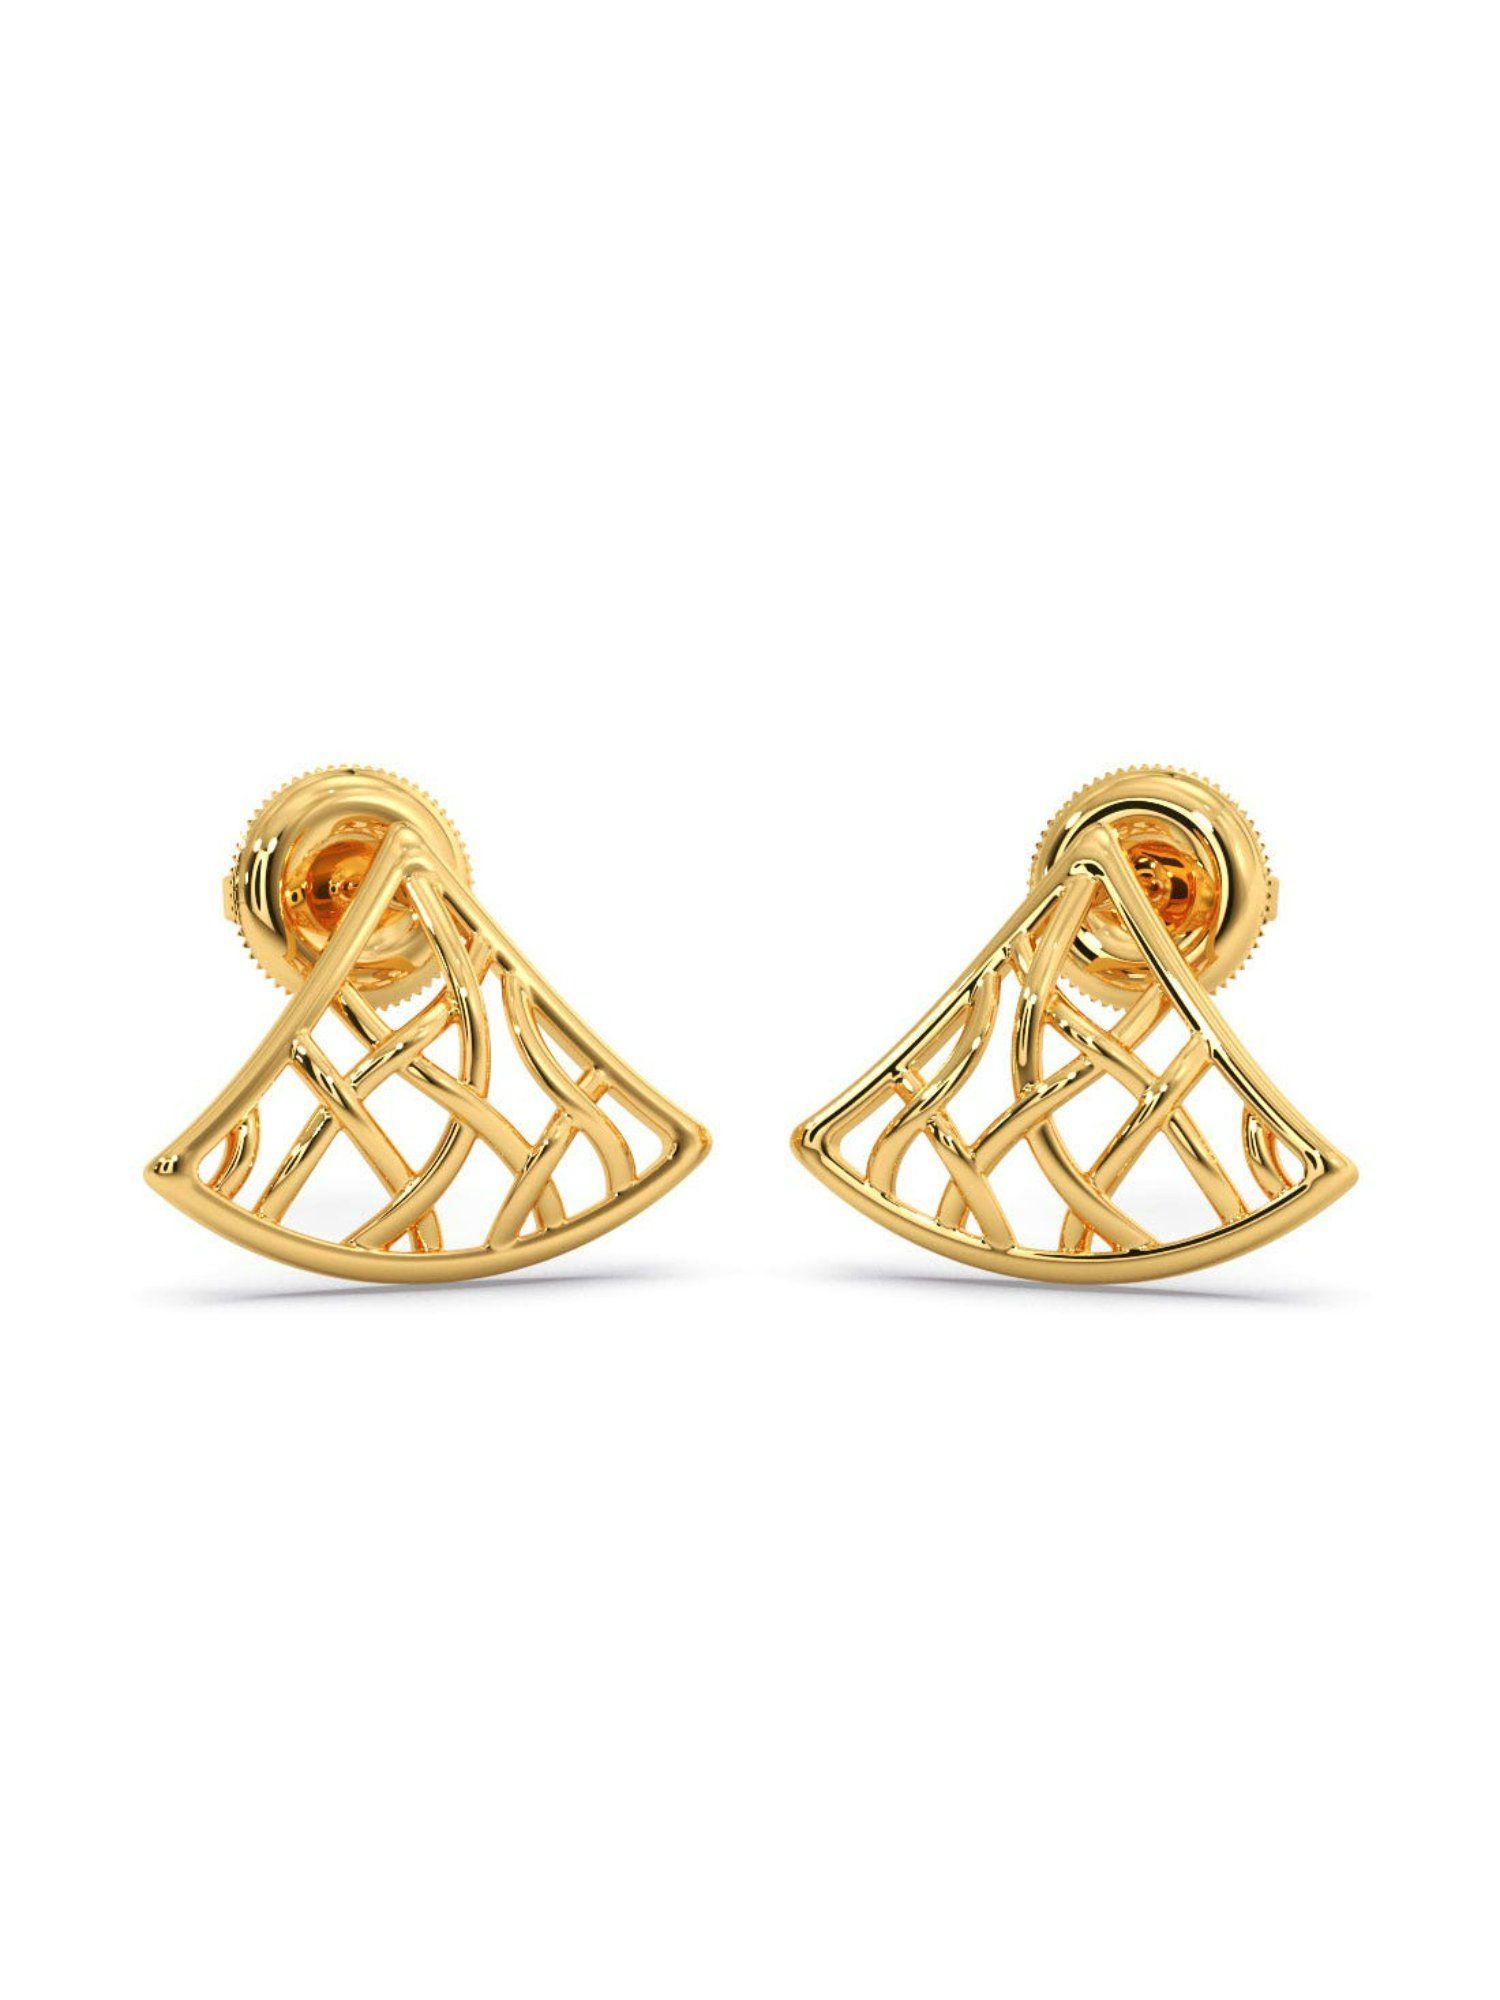 18k (750) bis hallmark yellow gold stud earring for women